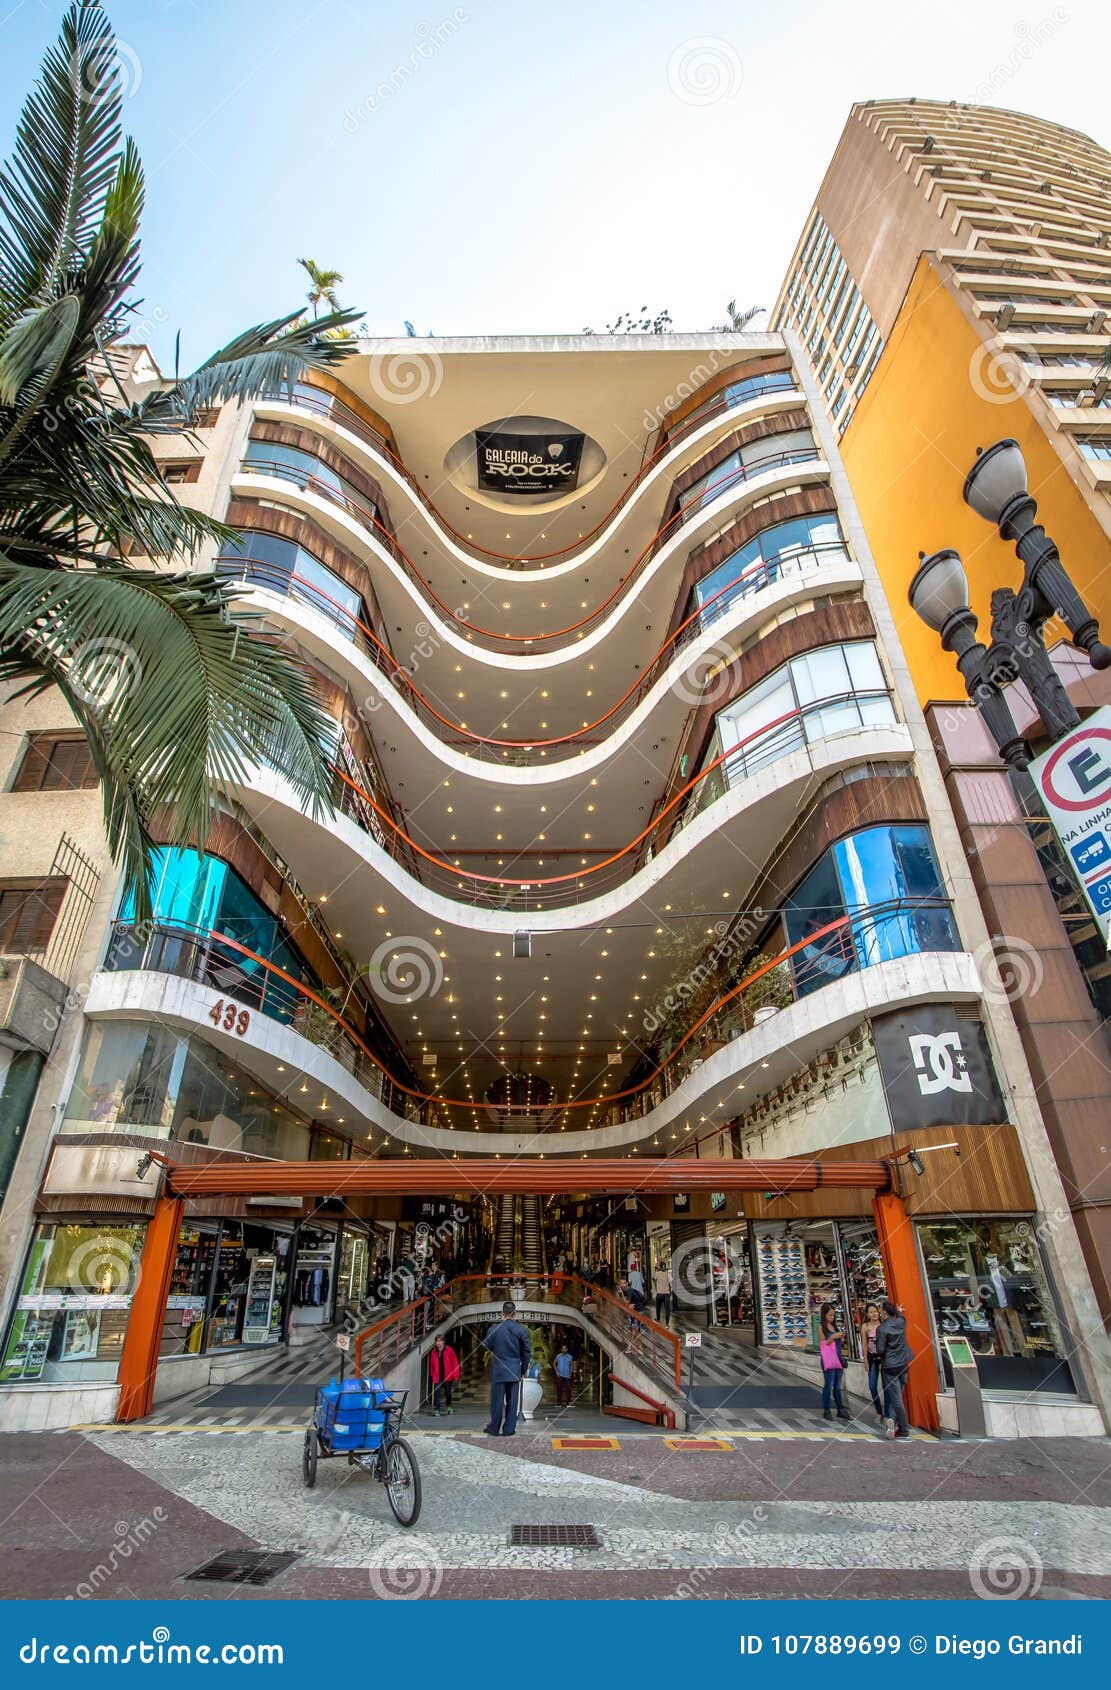 https://thumbs.dreamstime.com/z/galeria-do-rock-gallery-shopping-mall-facade-dowtown-sao-paulo-brazil-nov-107889699.jpg